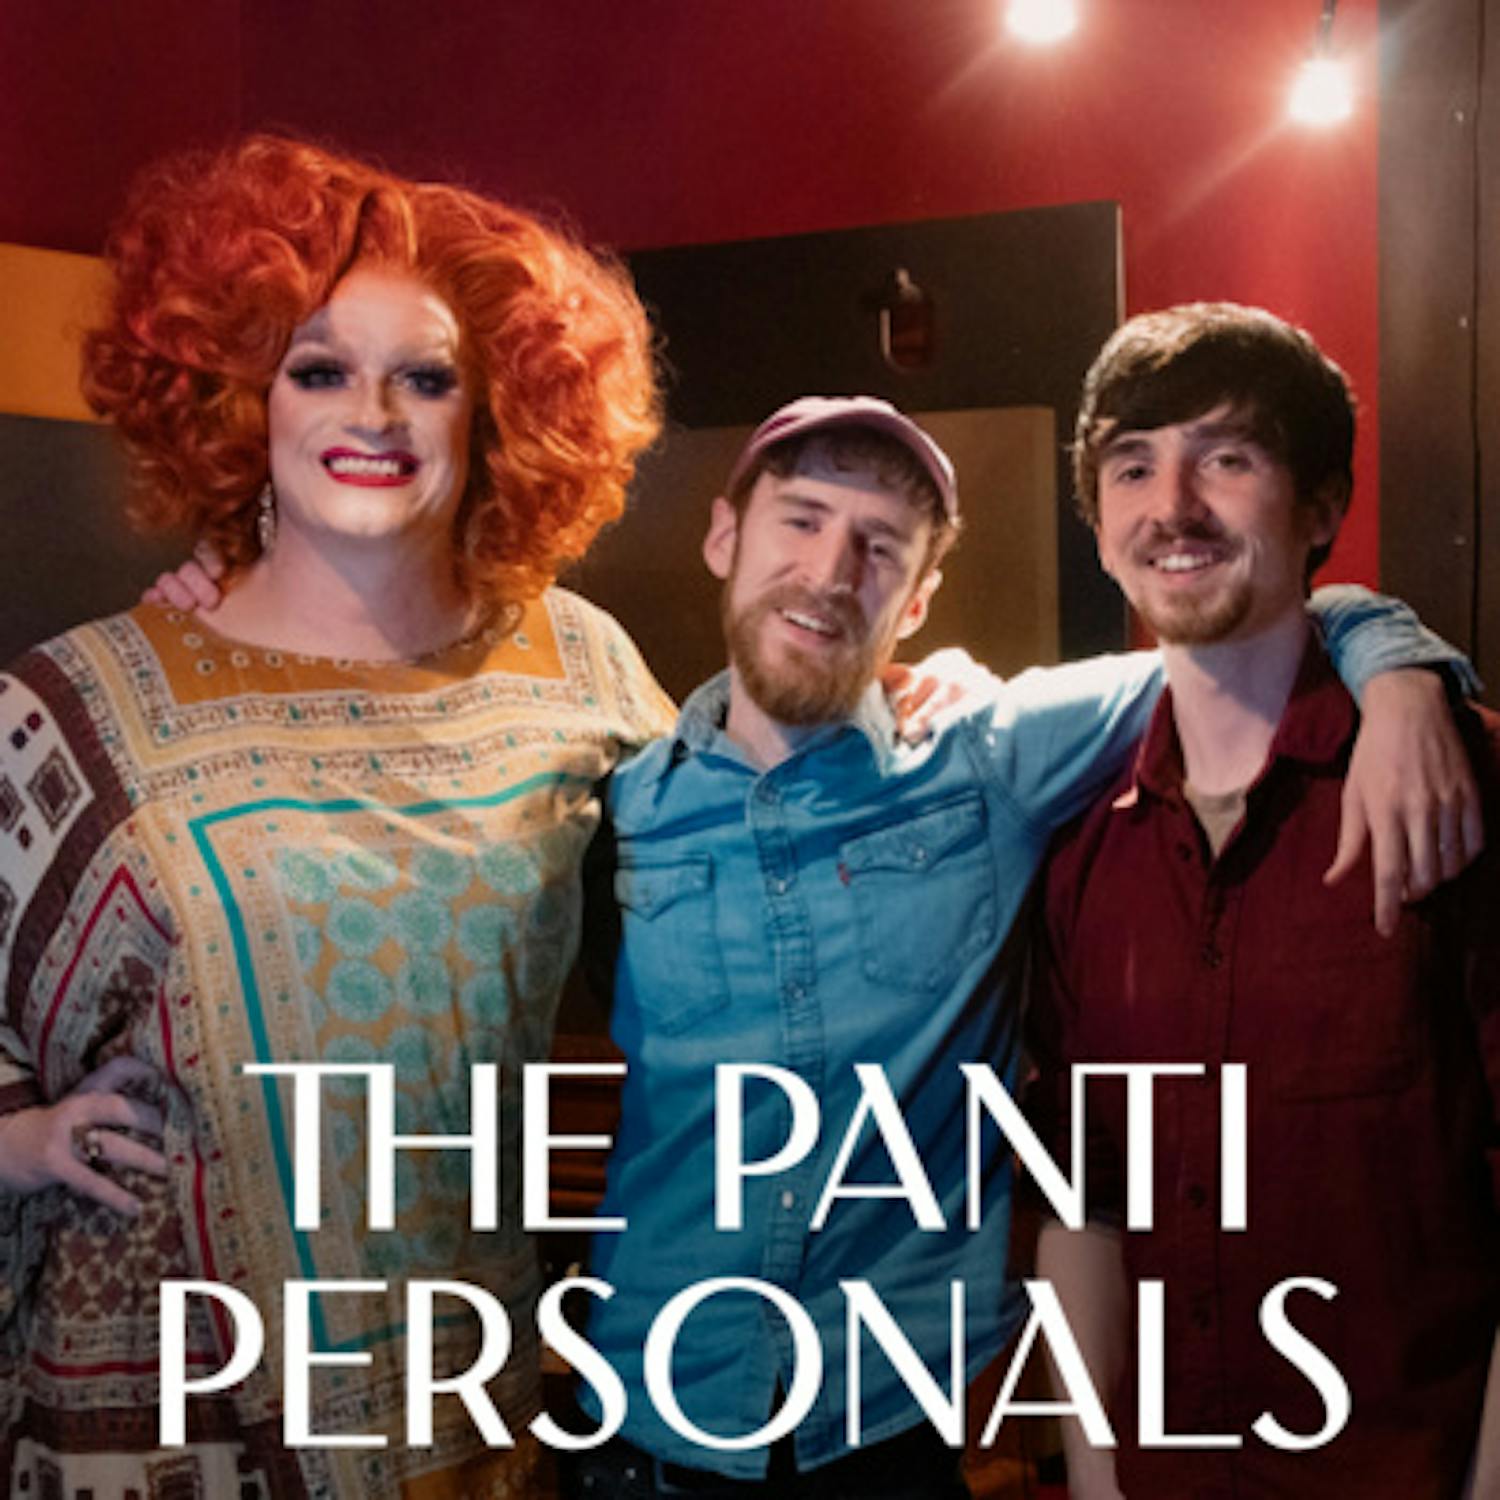 The Panti Personals - S2 E2 - Ye Vagabonds